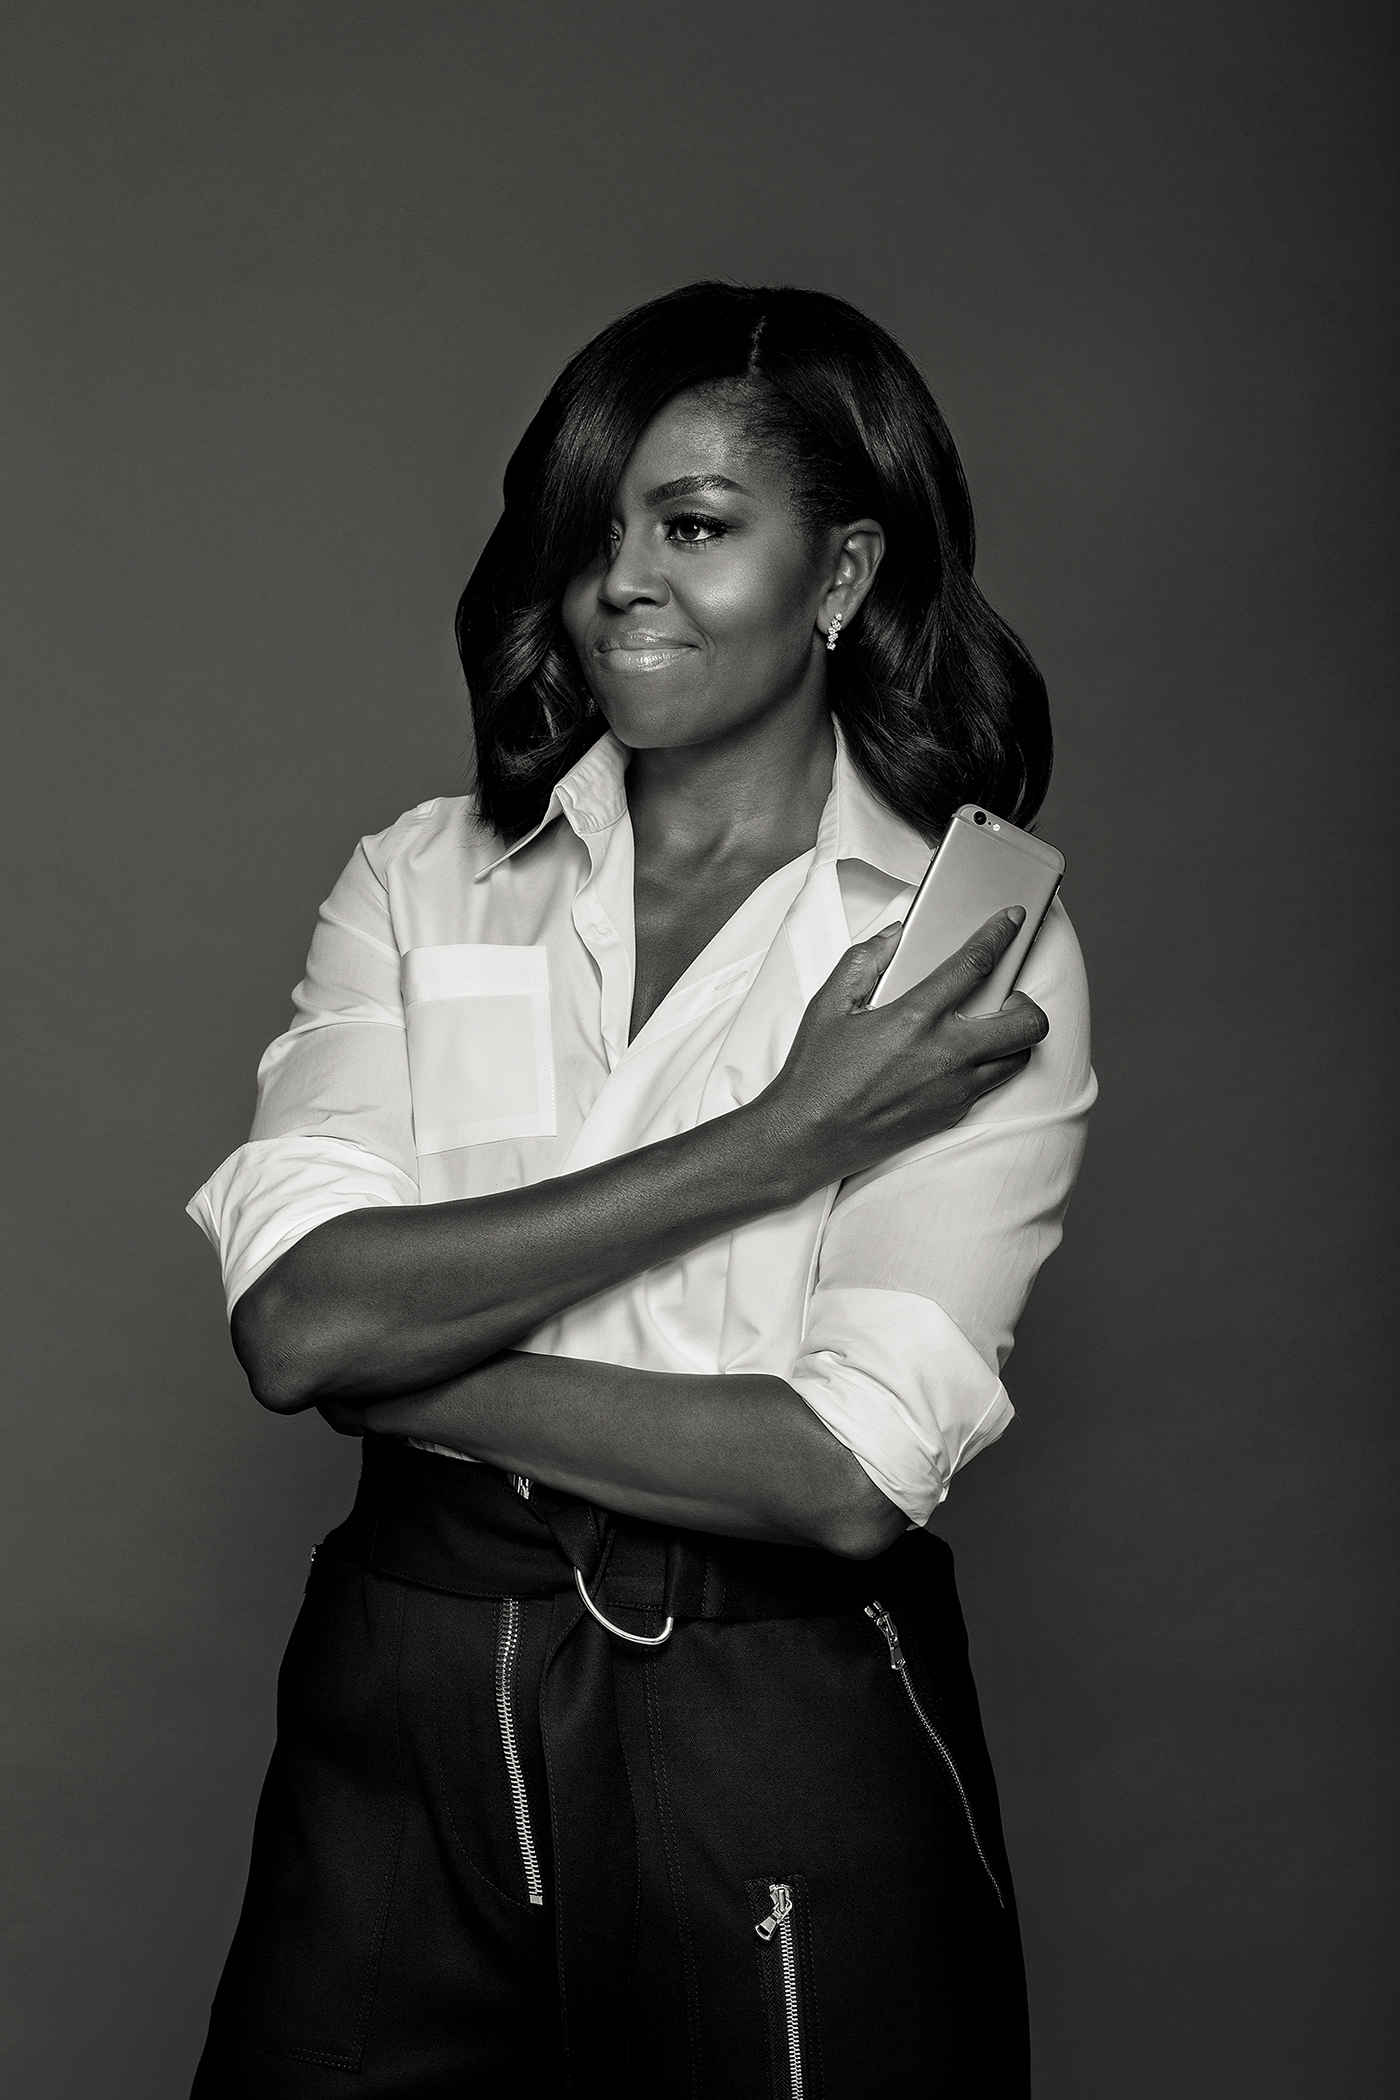 b&w portraits black & white color portraits celebrities michelle obama FLOTUS the verge vox media